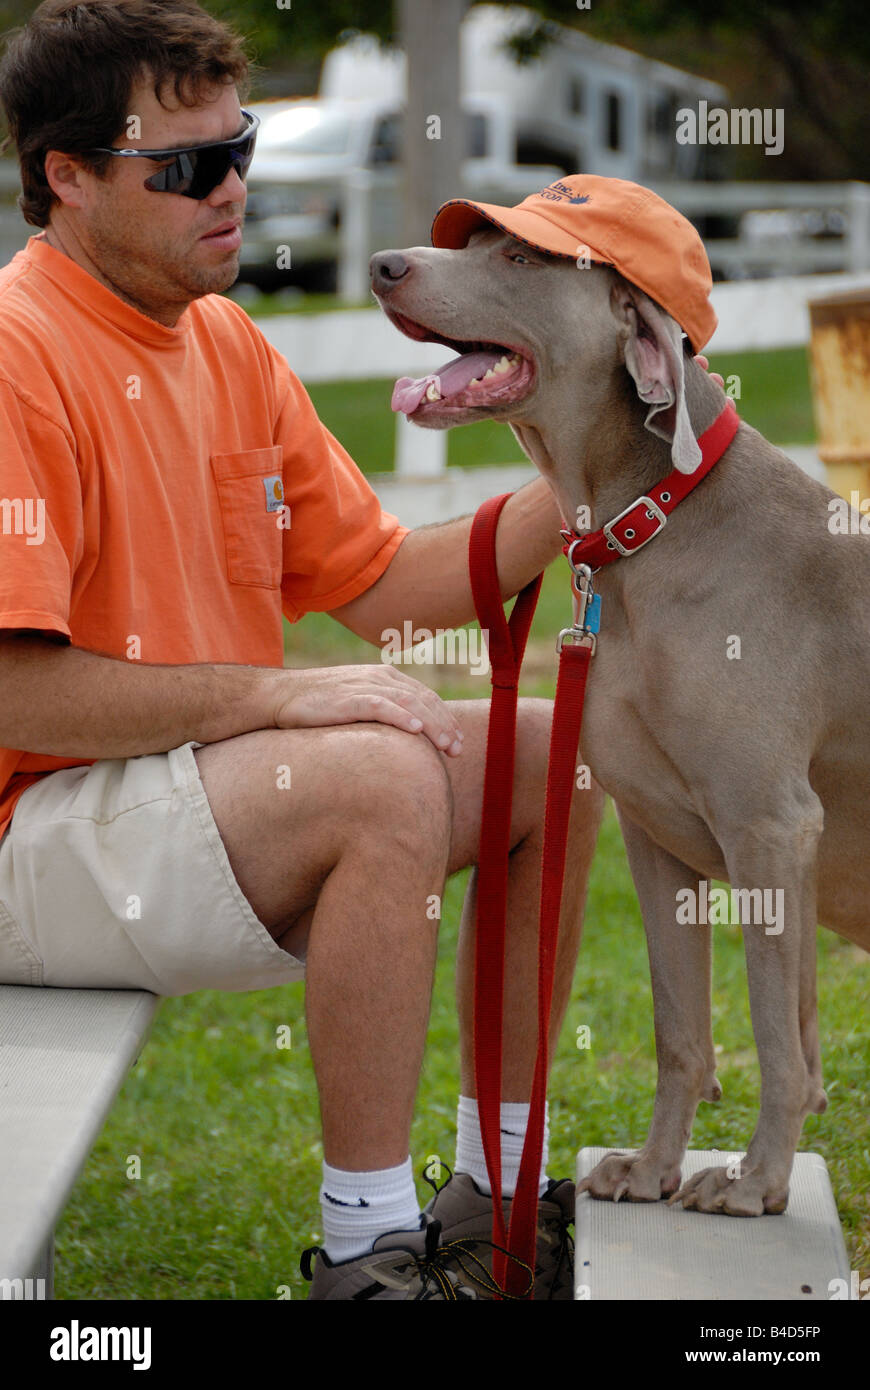 This Weimaraner is wearing an orange baseball cap that matches his master's shirt. Stock Photo